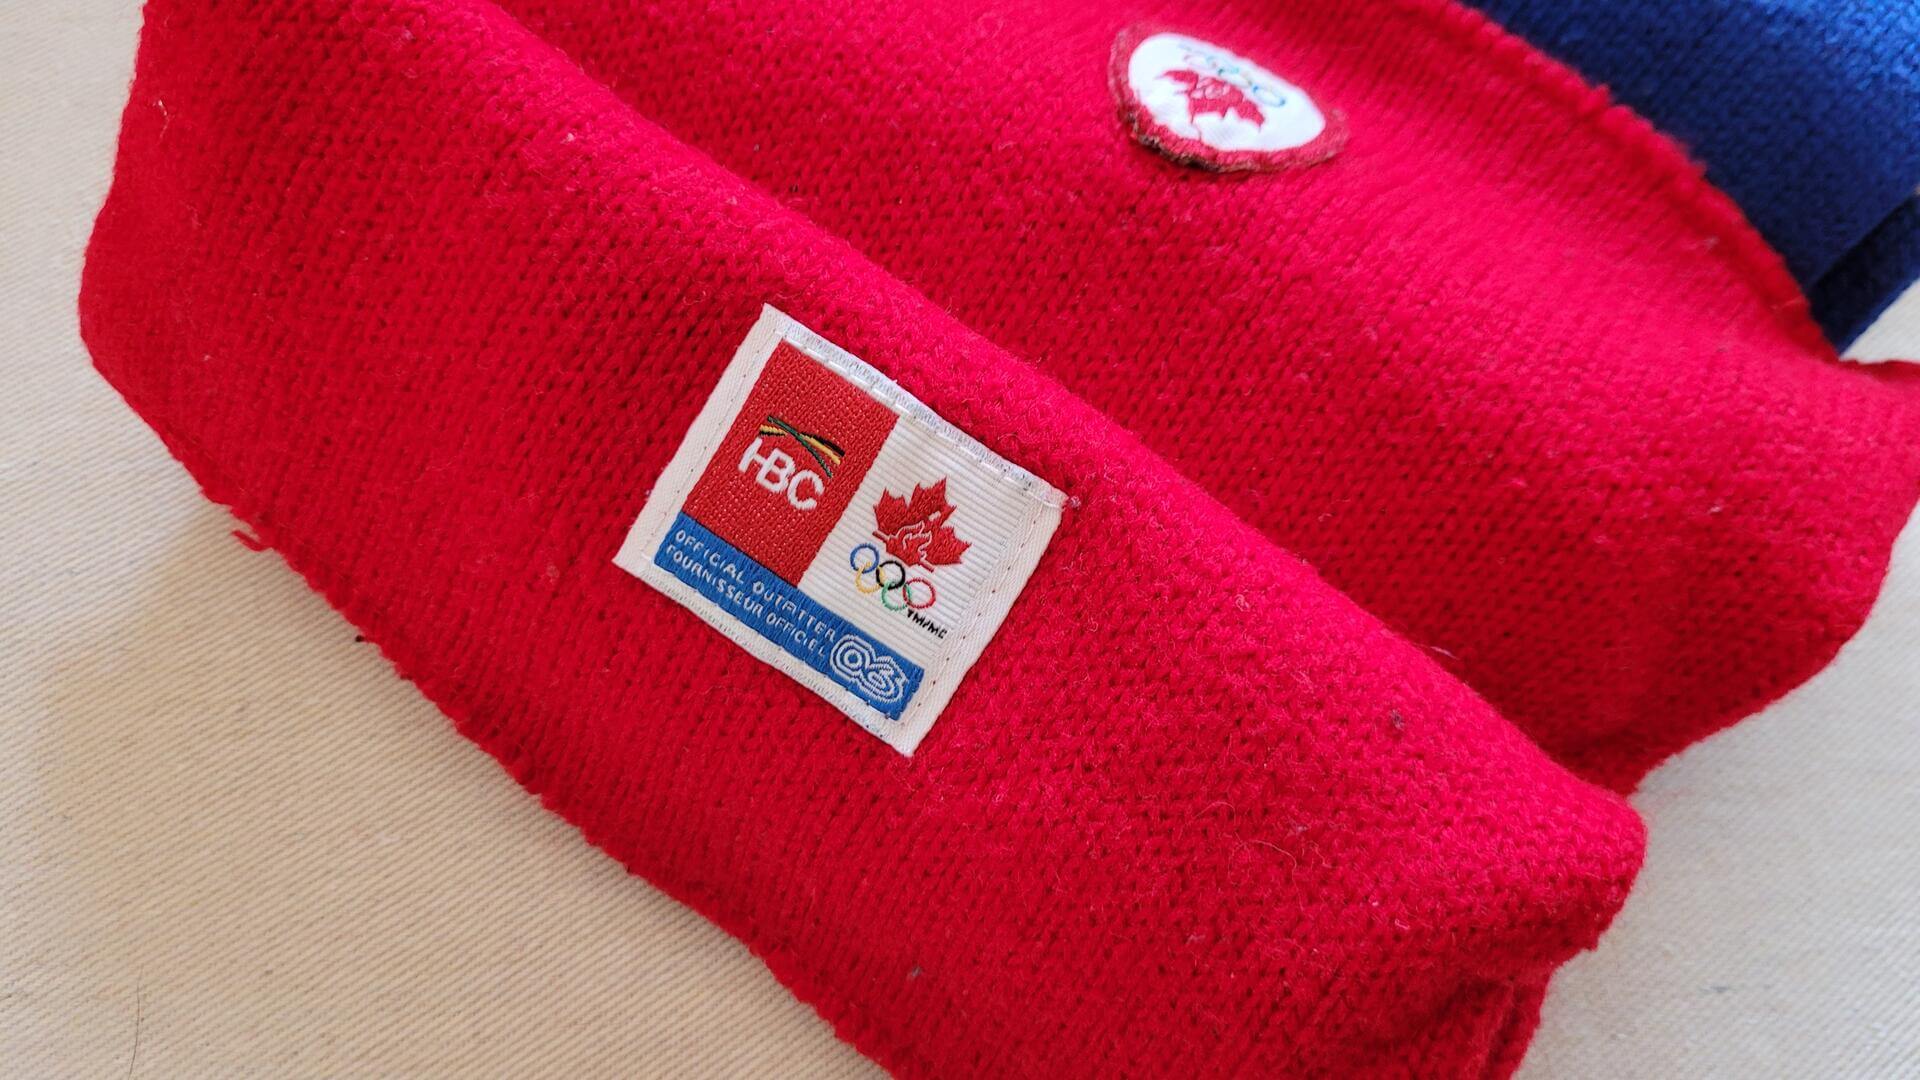 2006 HBC Team Canada Torino Winter Olympics in multicolour adult scarf. Vintage Canadiana winter wear accessory and sports memorabilia